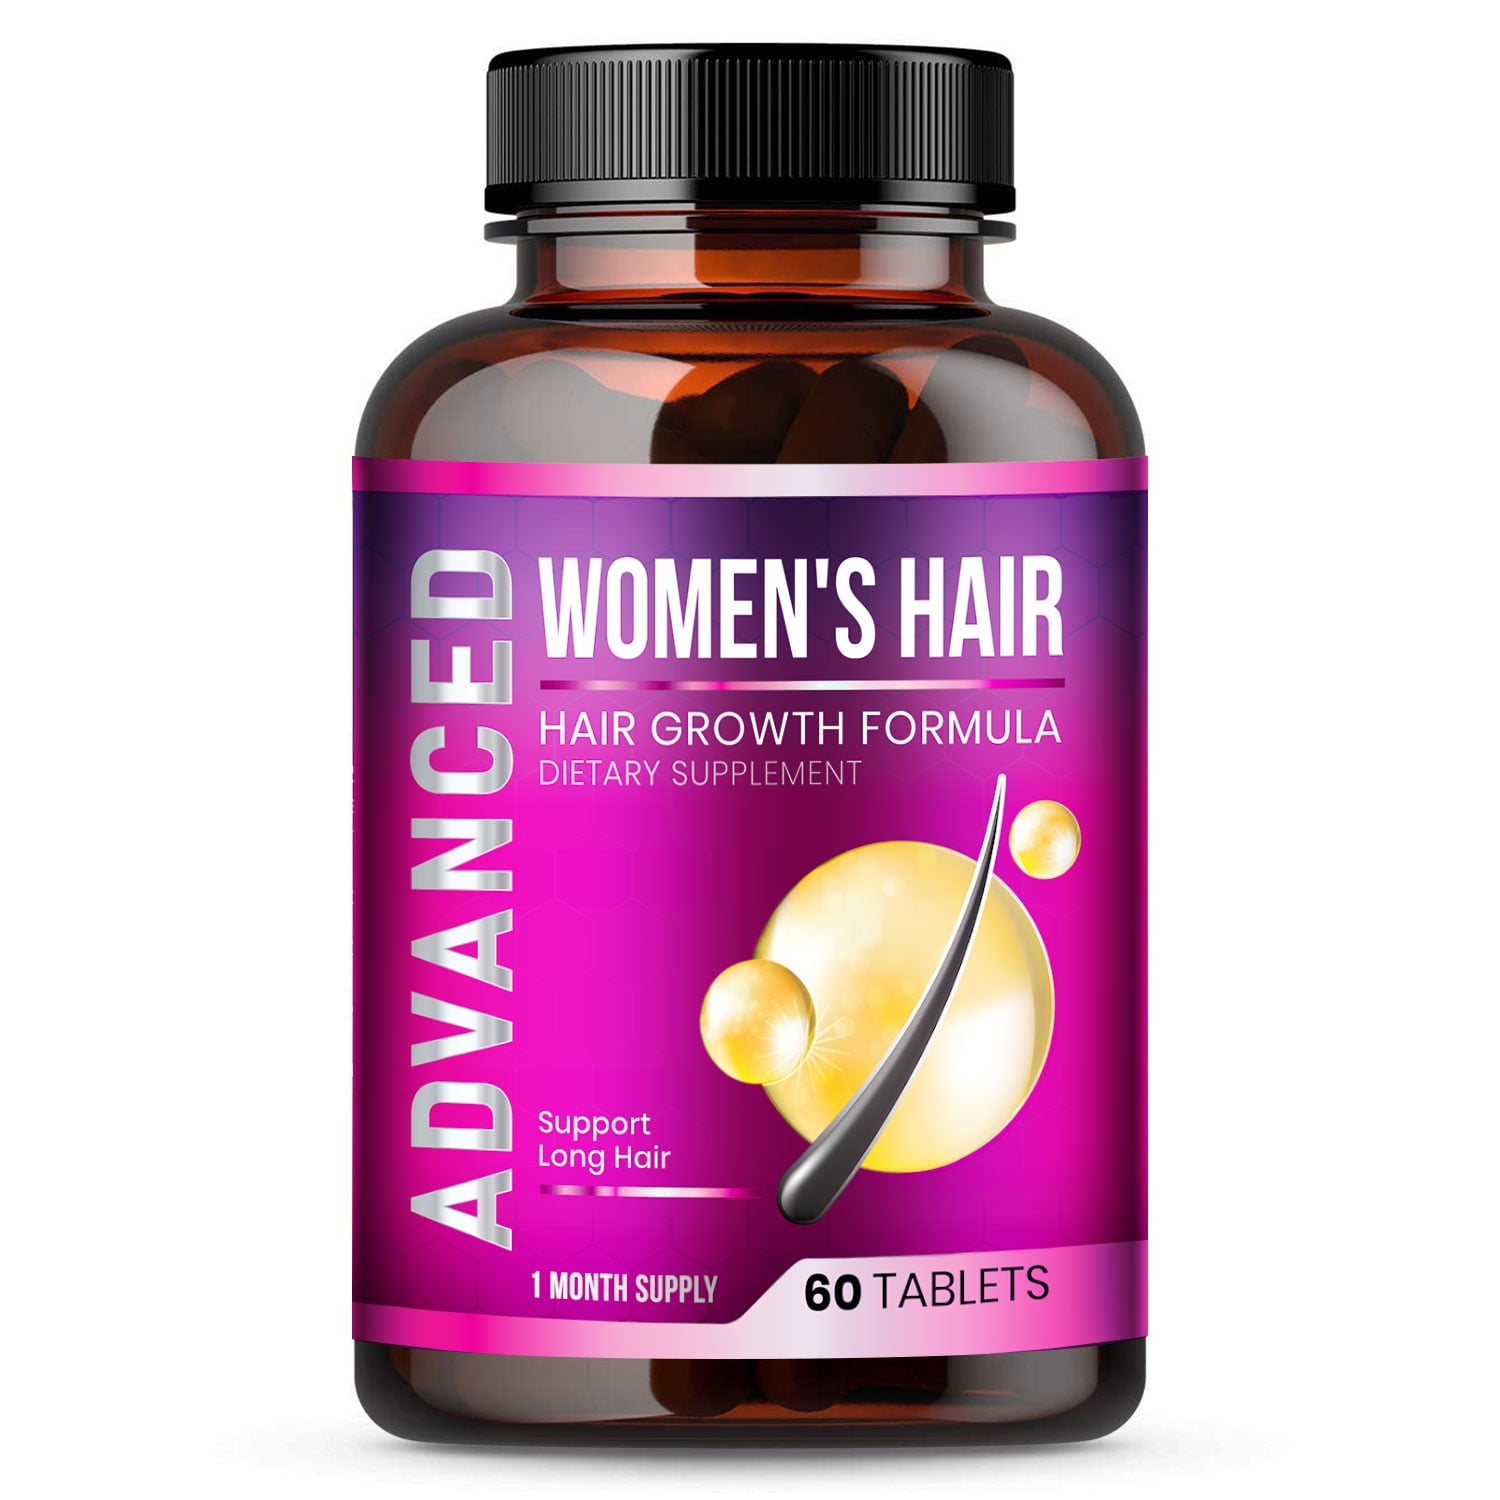 Hair Growth Vitamins For Women - Hair Vitamins For Hair Loss For Women  .Regrow & Regrowth Hair Supplement With DHT Blocker,Biotin & Saw Palmetto  For ,Thicker,Longer Hair. 